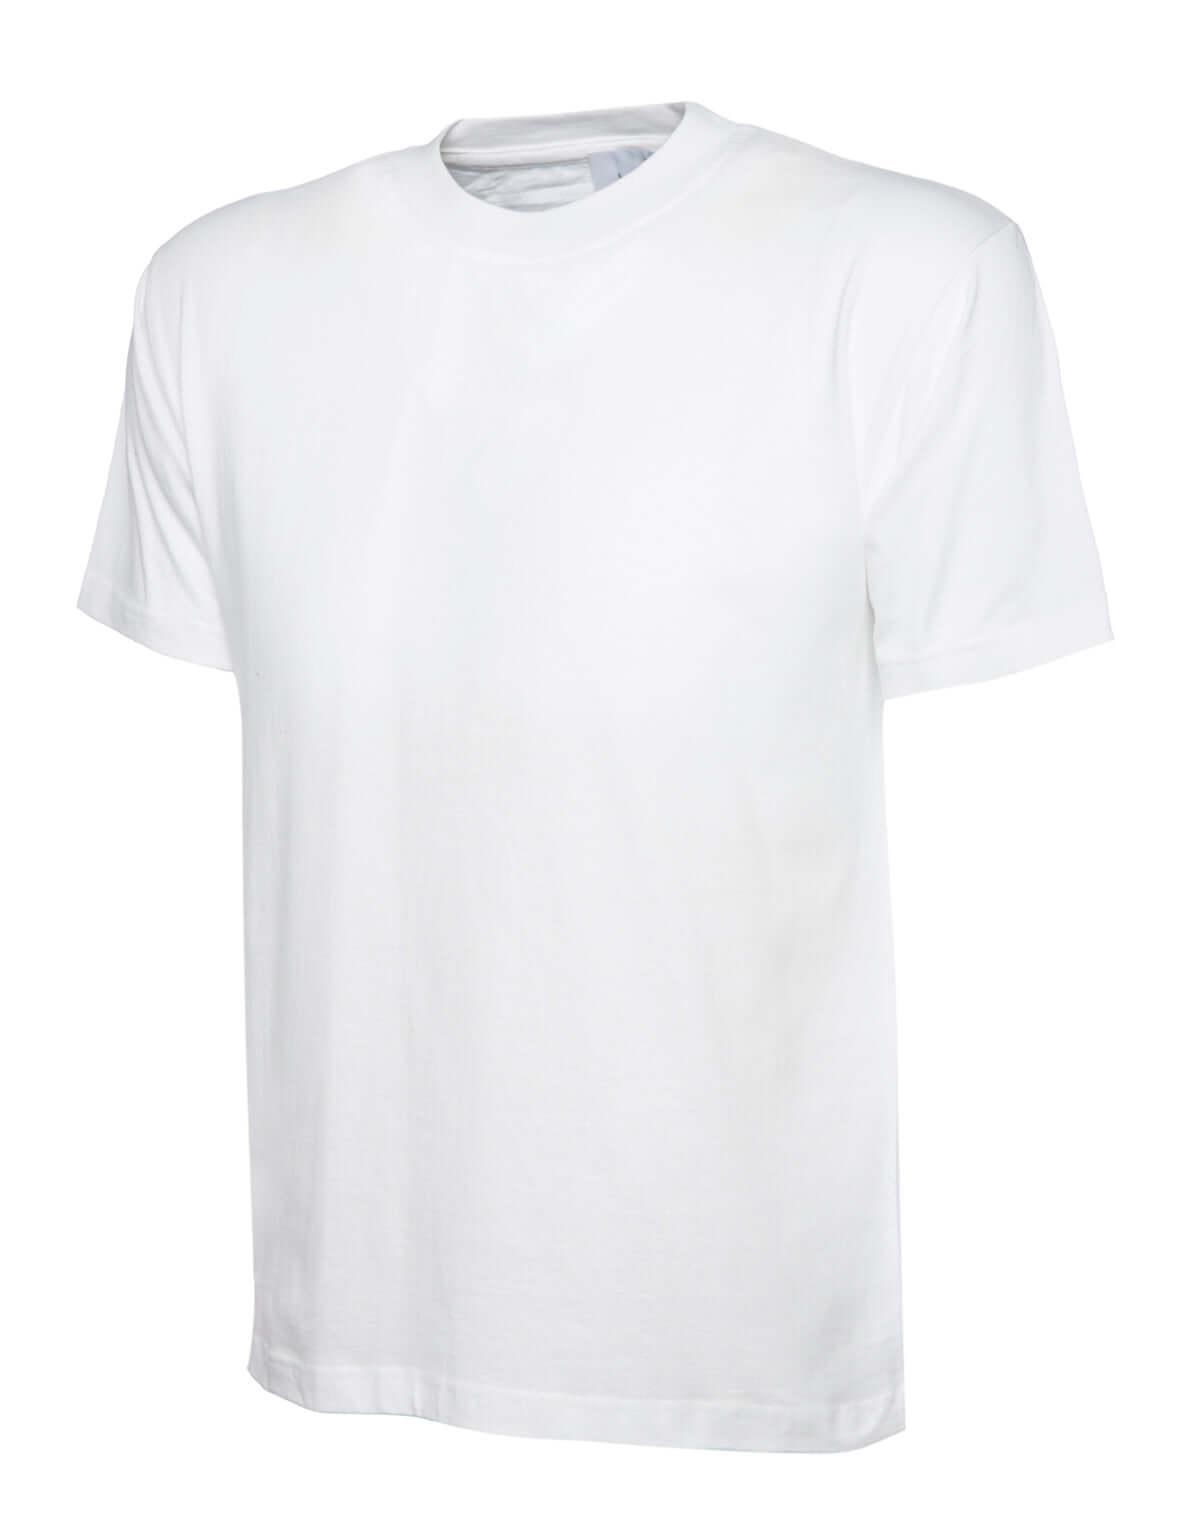 Pegasus Uniform Classic T-shirt - White